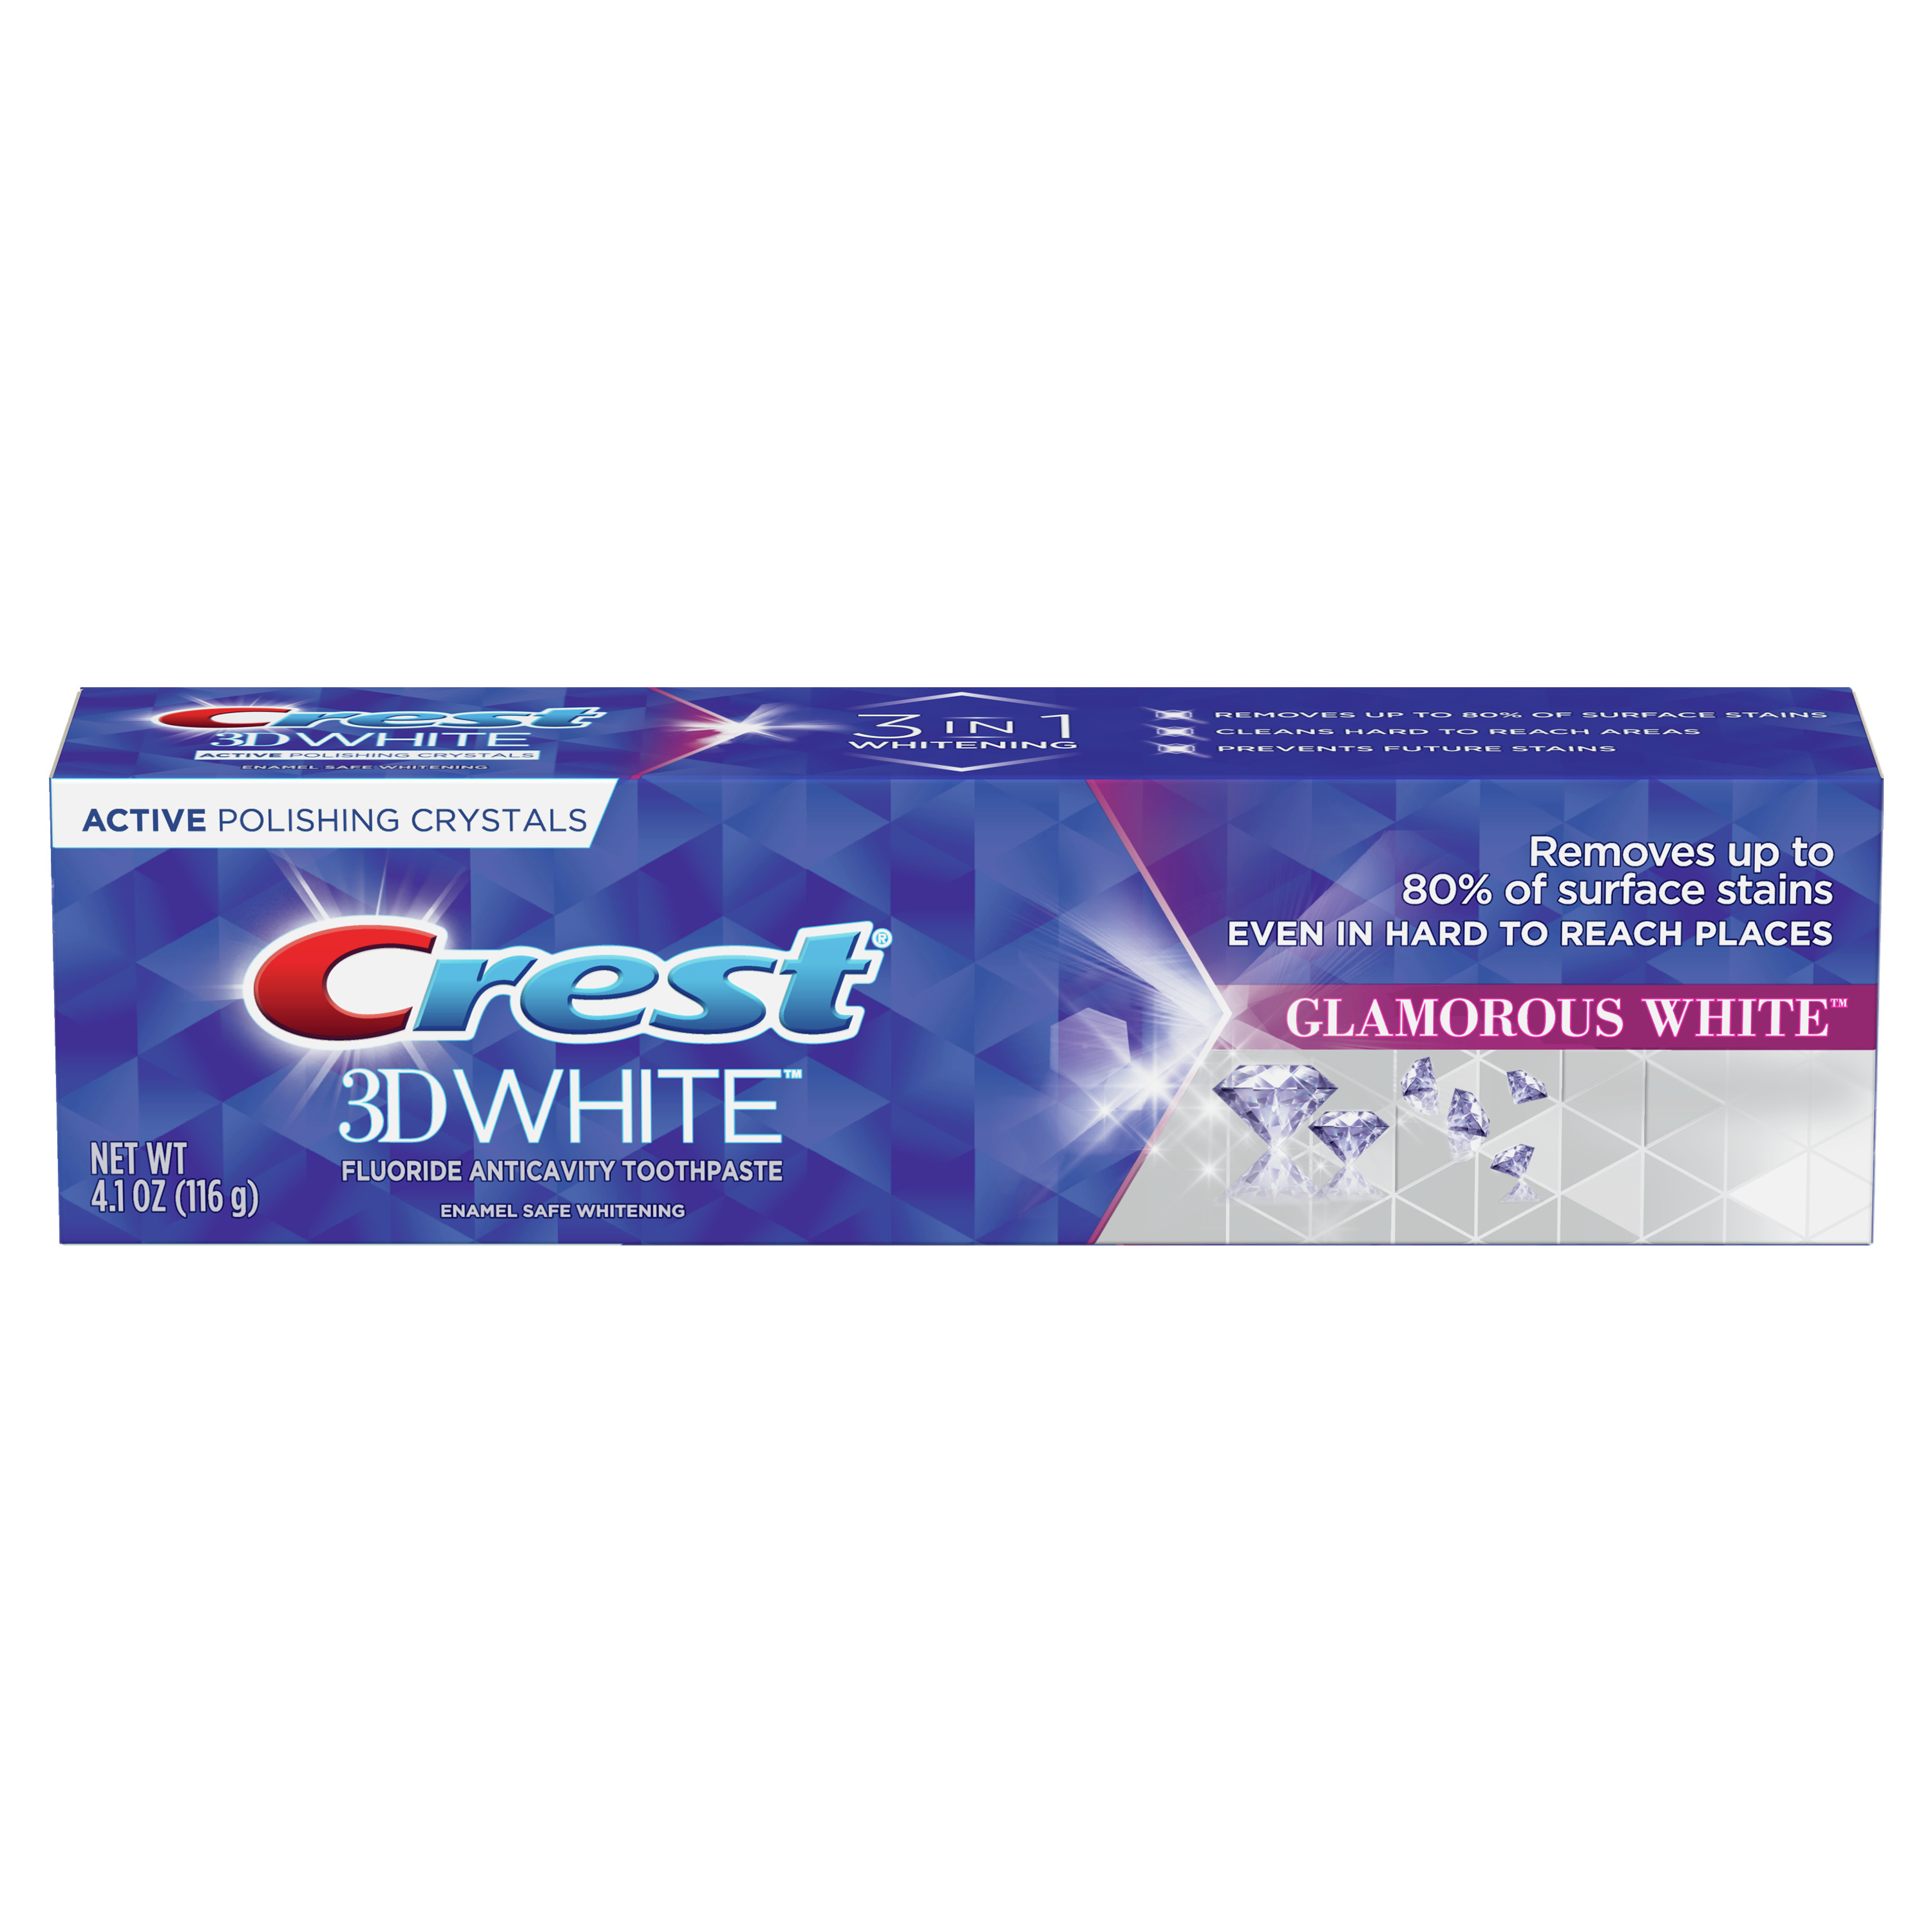 Crest 3D White, Whitening Toothpaste Glamorous White, 4.1 oz - image 1 of 5